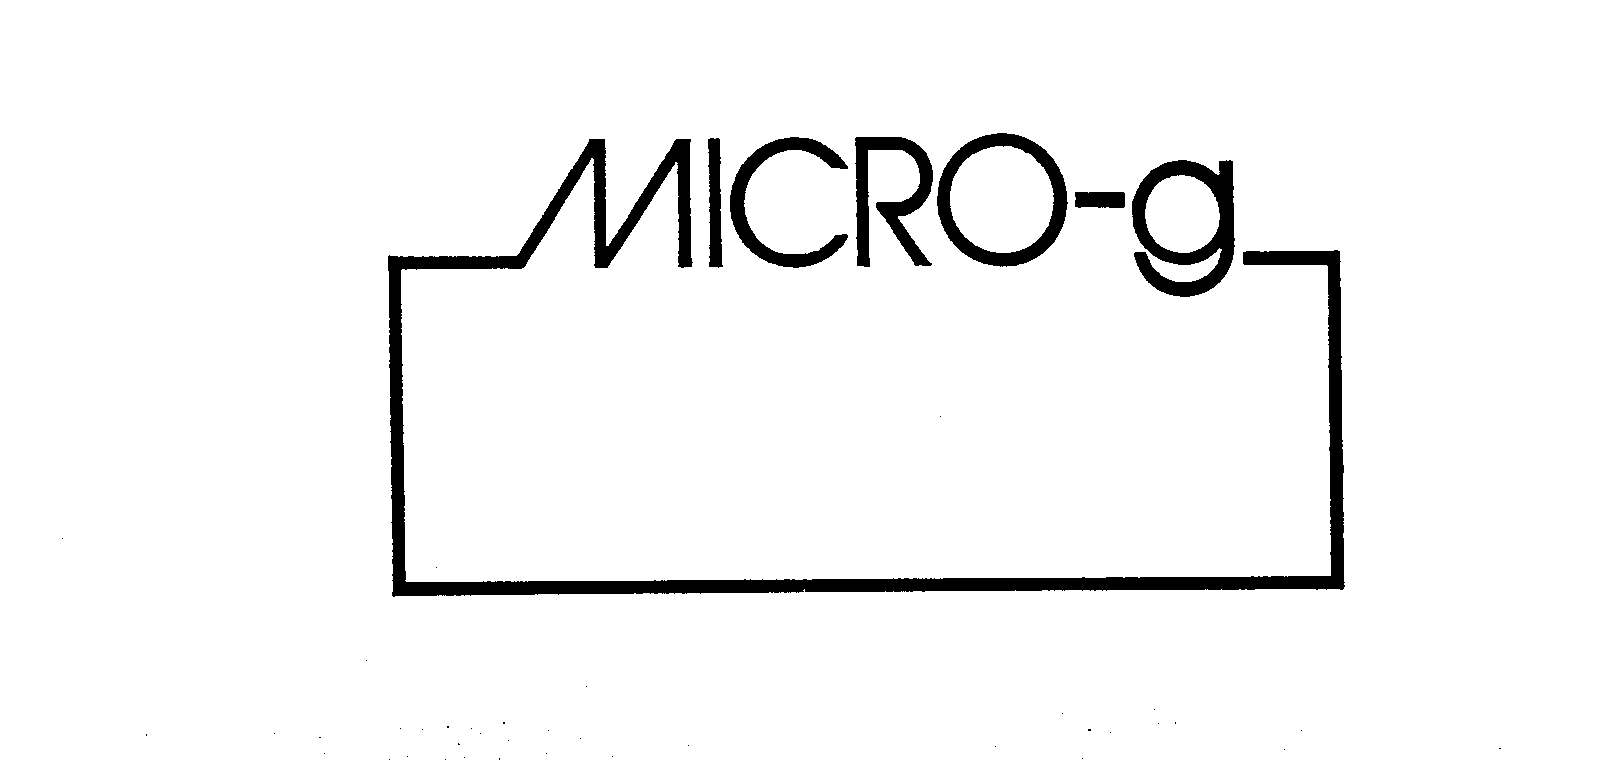 MICRO-G